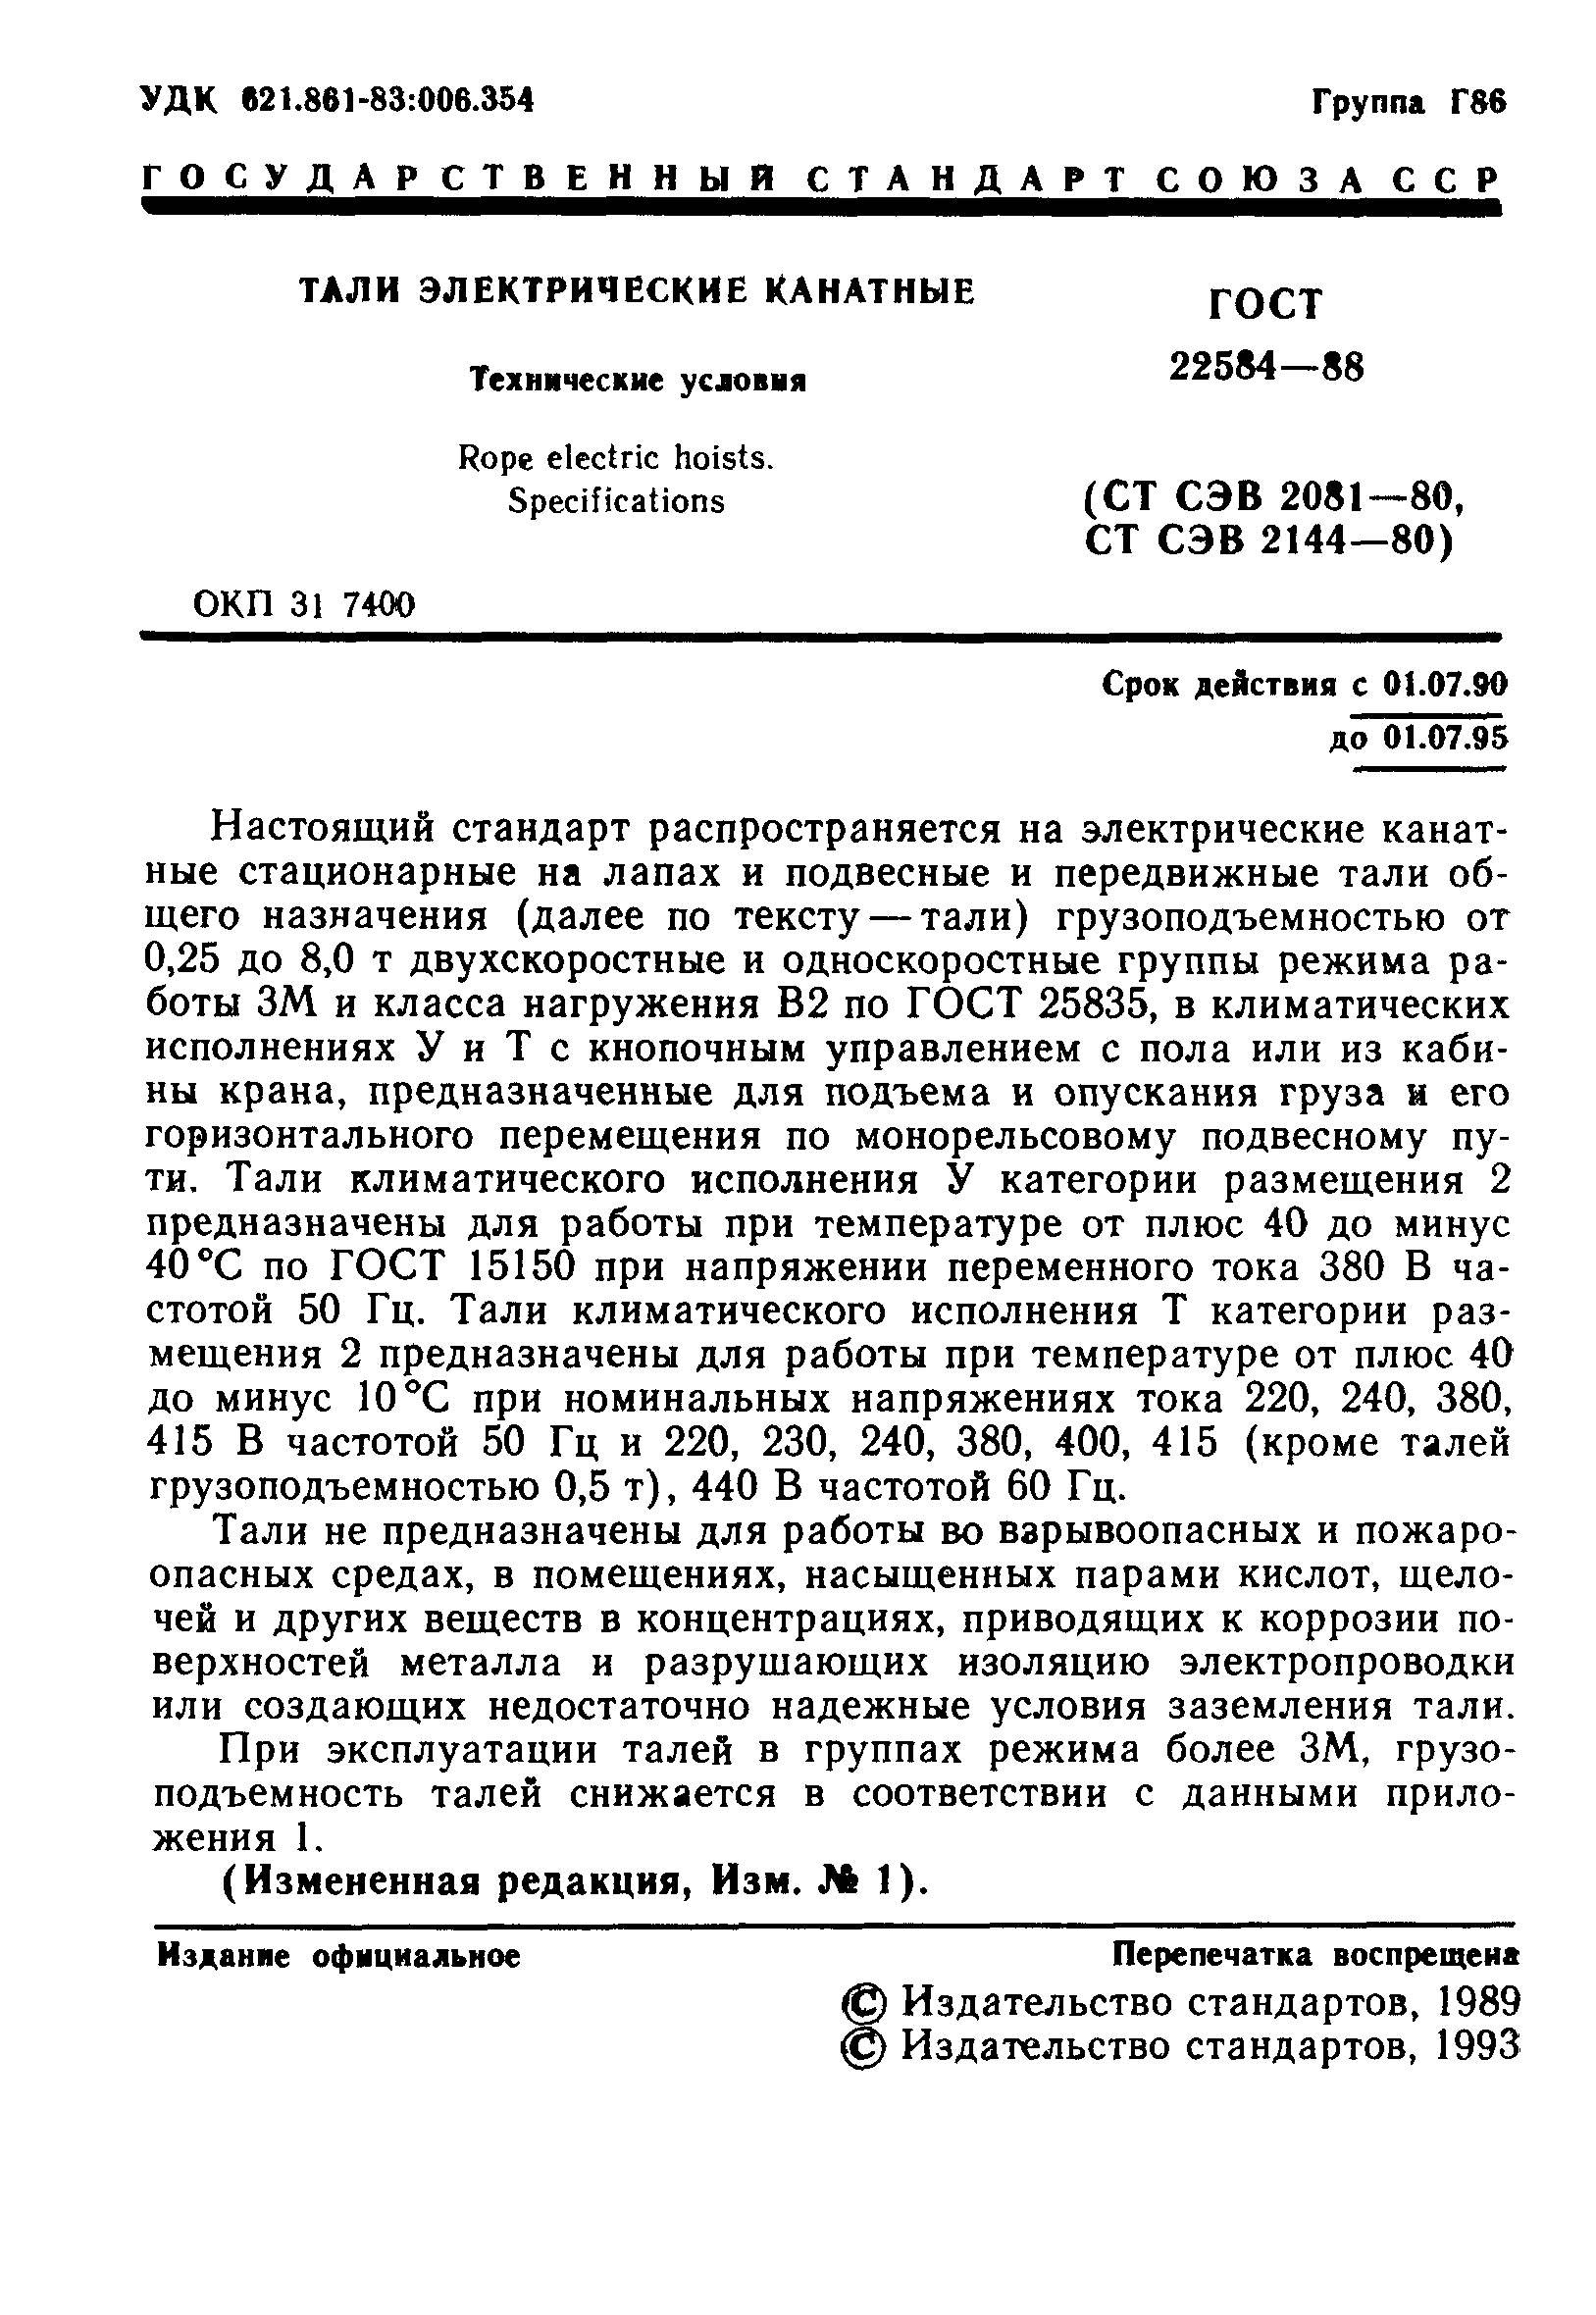 ГОСТ 22584-88